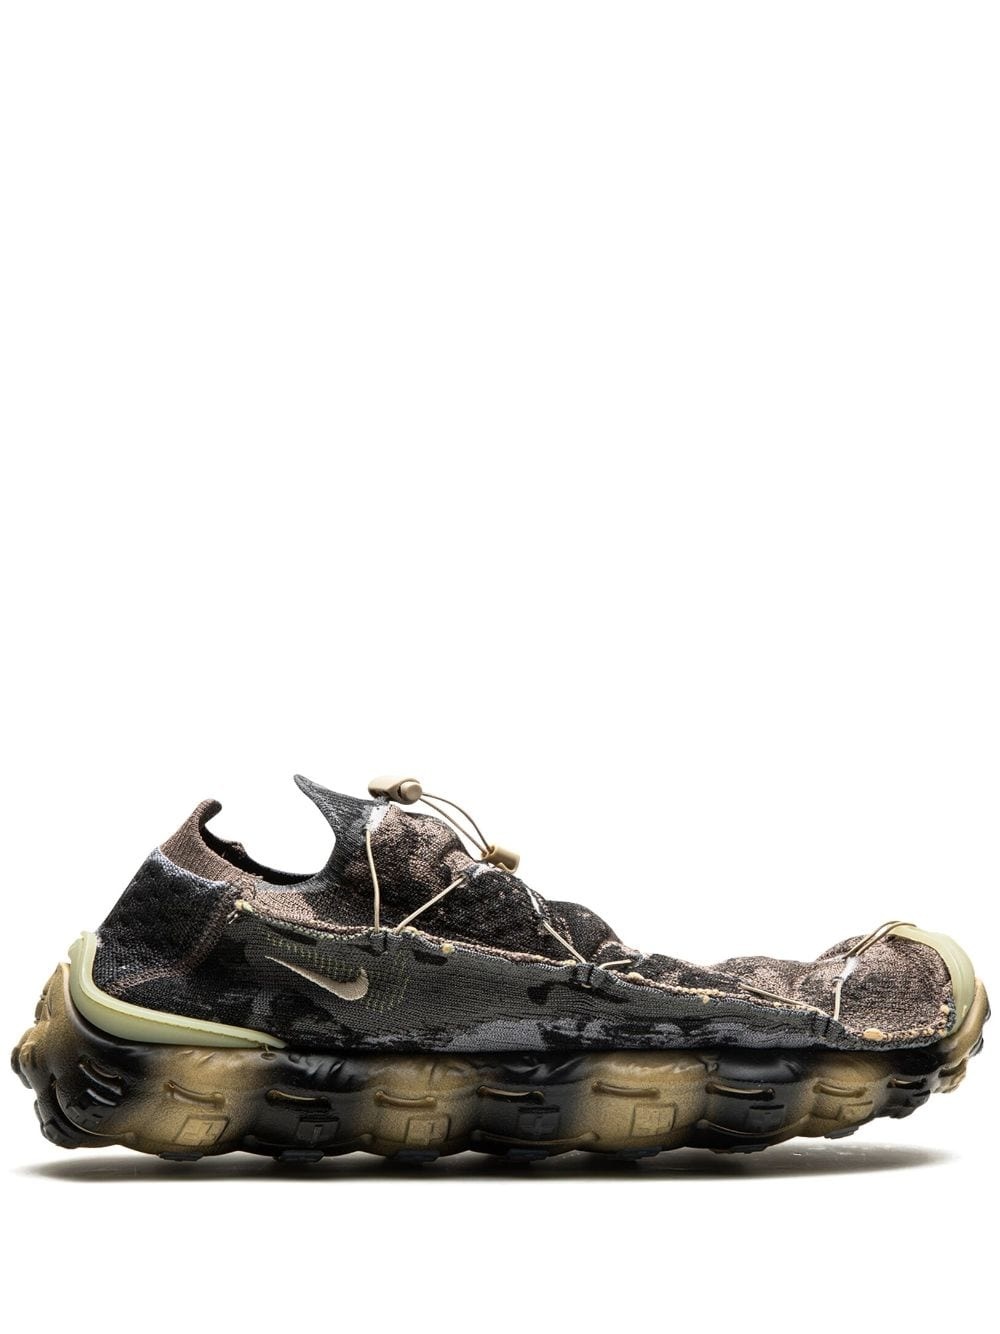 ISPA Mindbody "Olive Grey" sneakers - 1